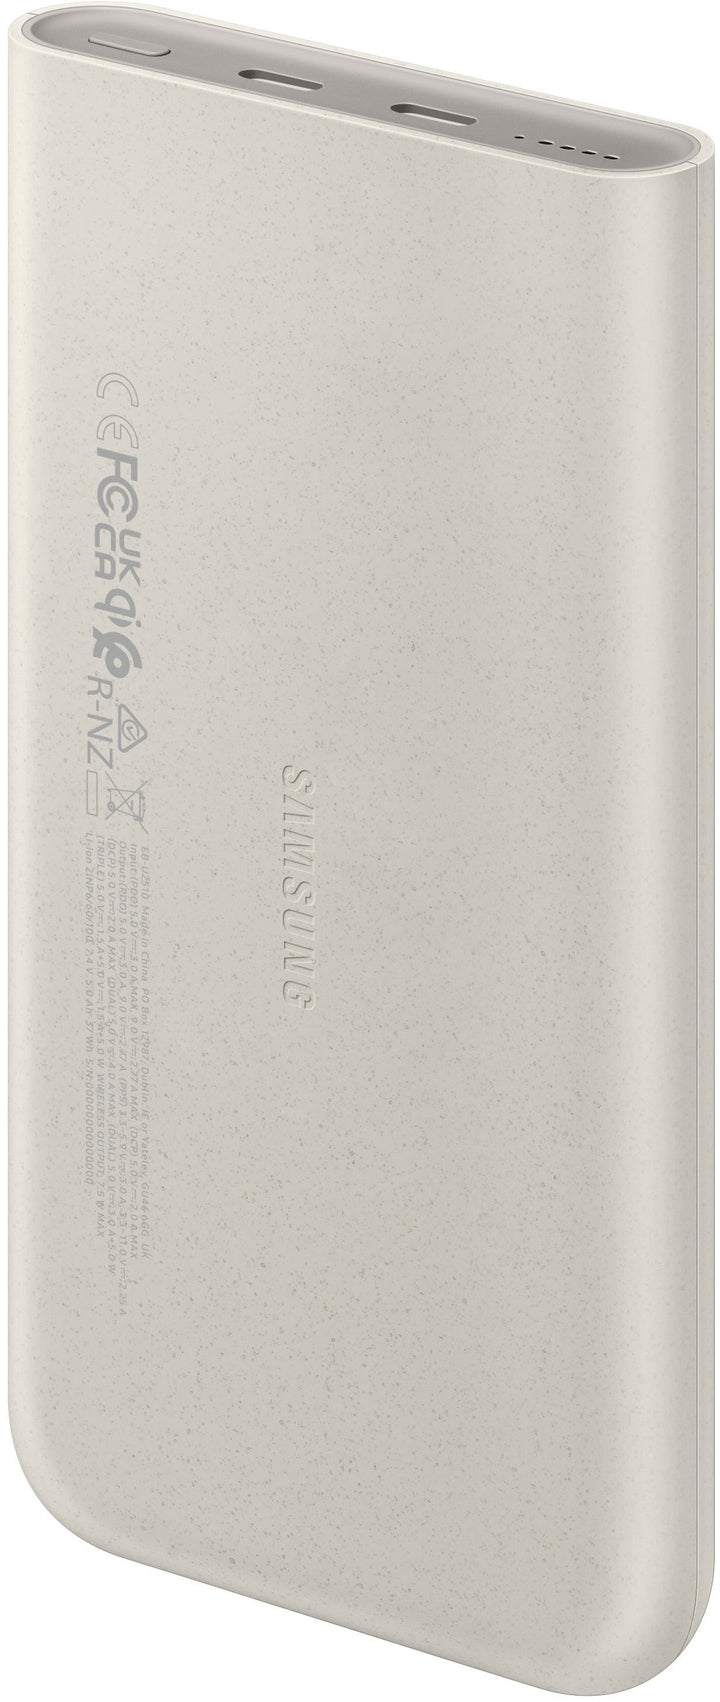 Samsung - 25W 10,000mAh Wireless Battery Pack - Beige_5